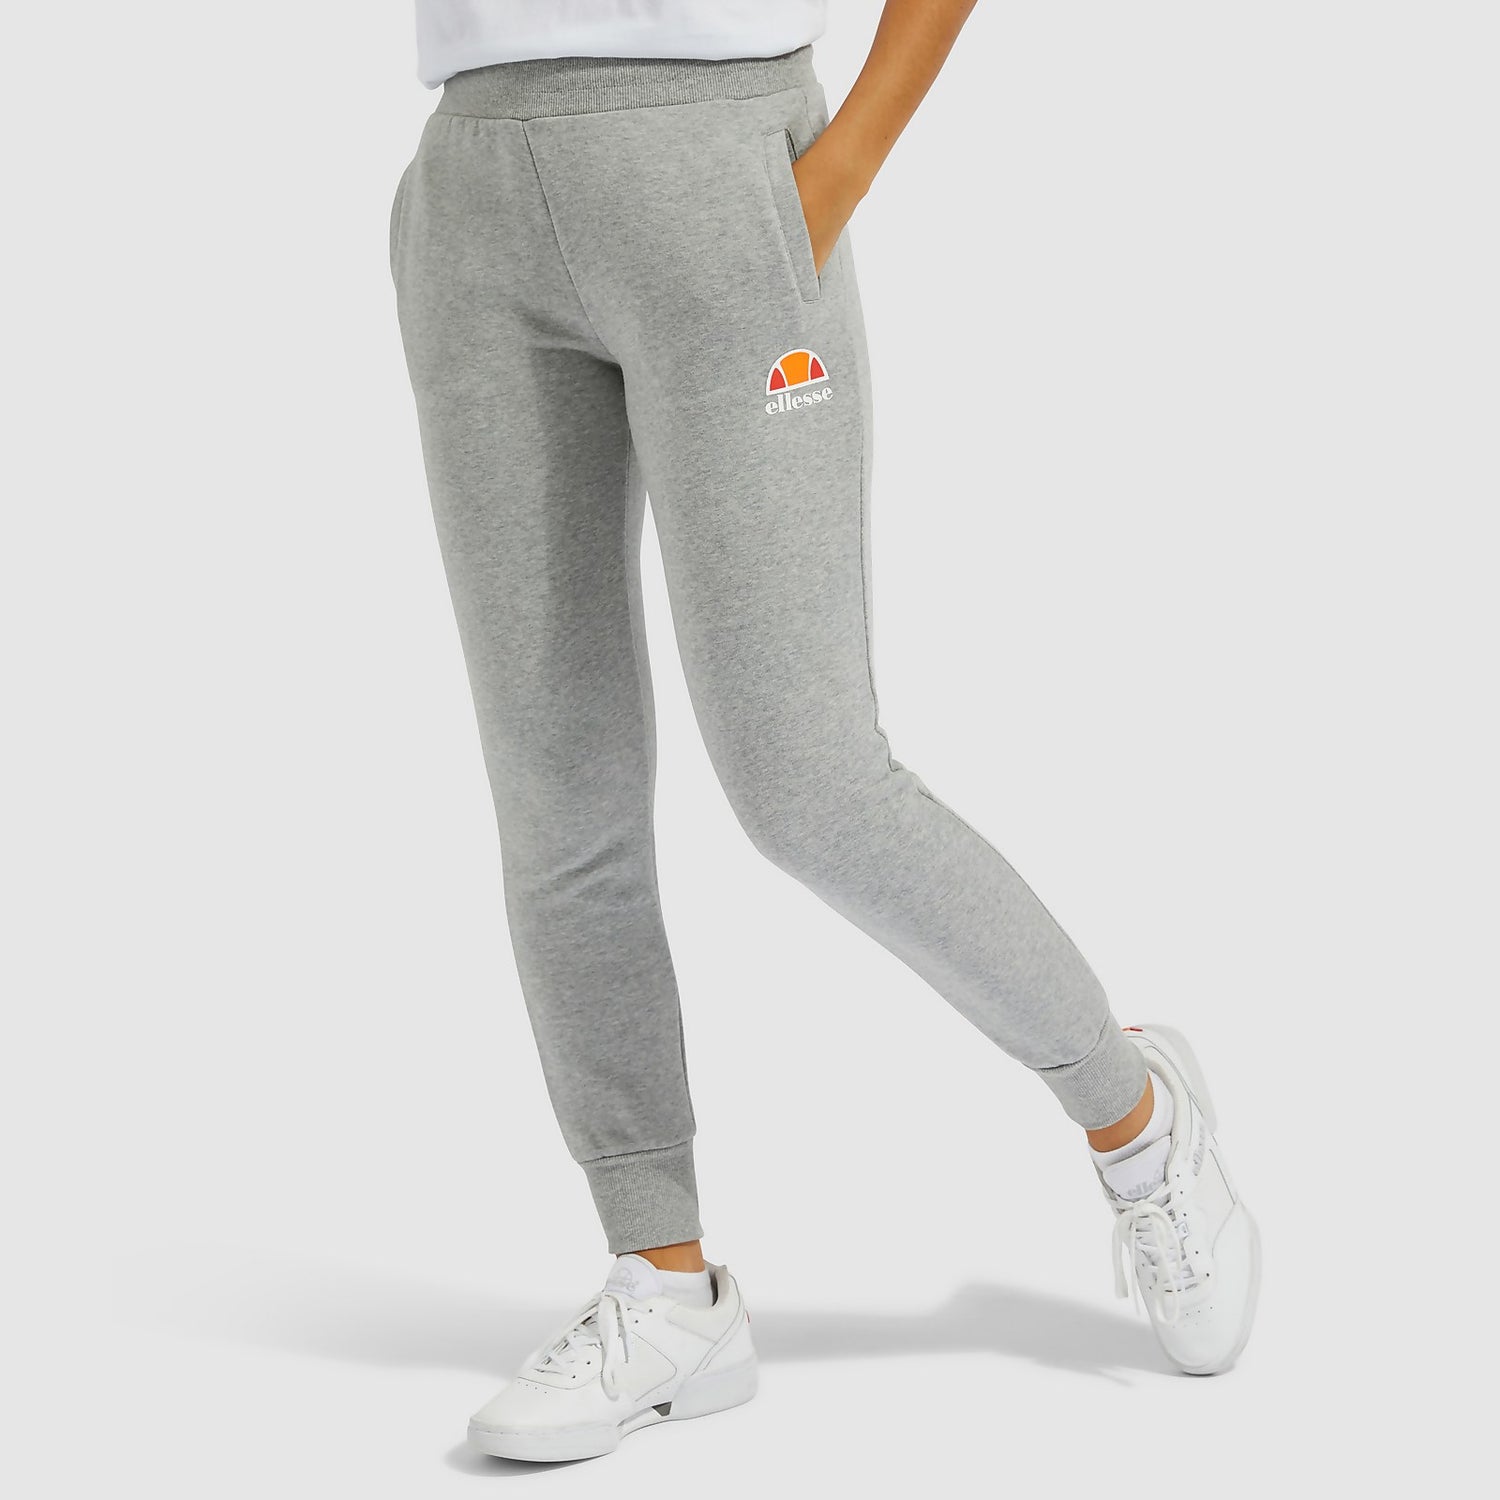 grey ellesse leggings - OFF-67% >Free Delivery